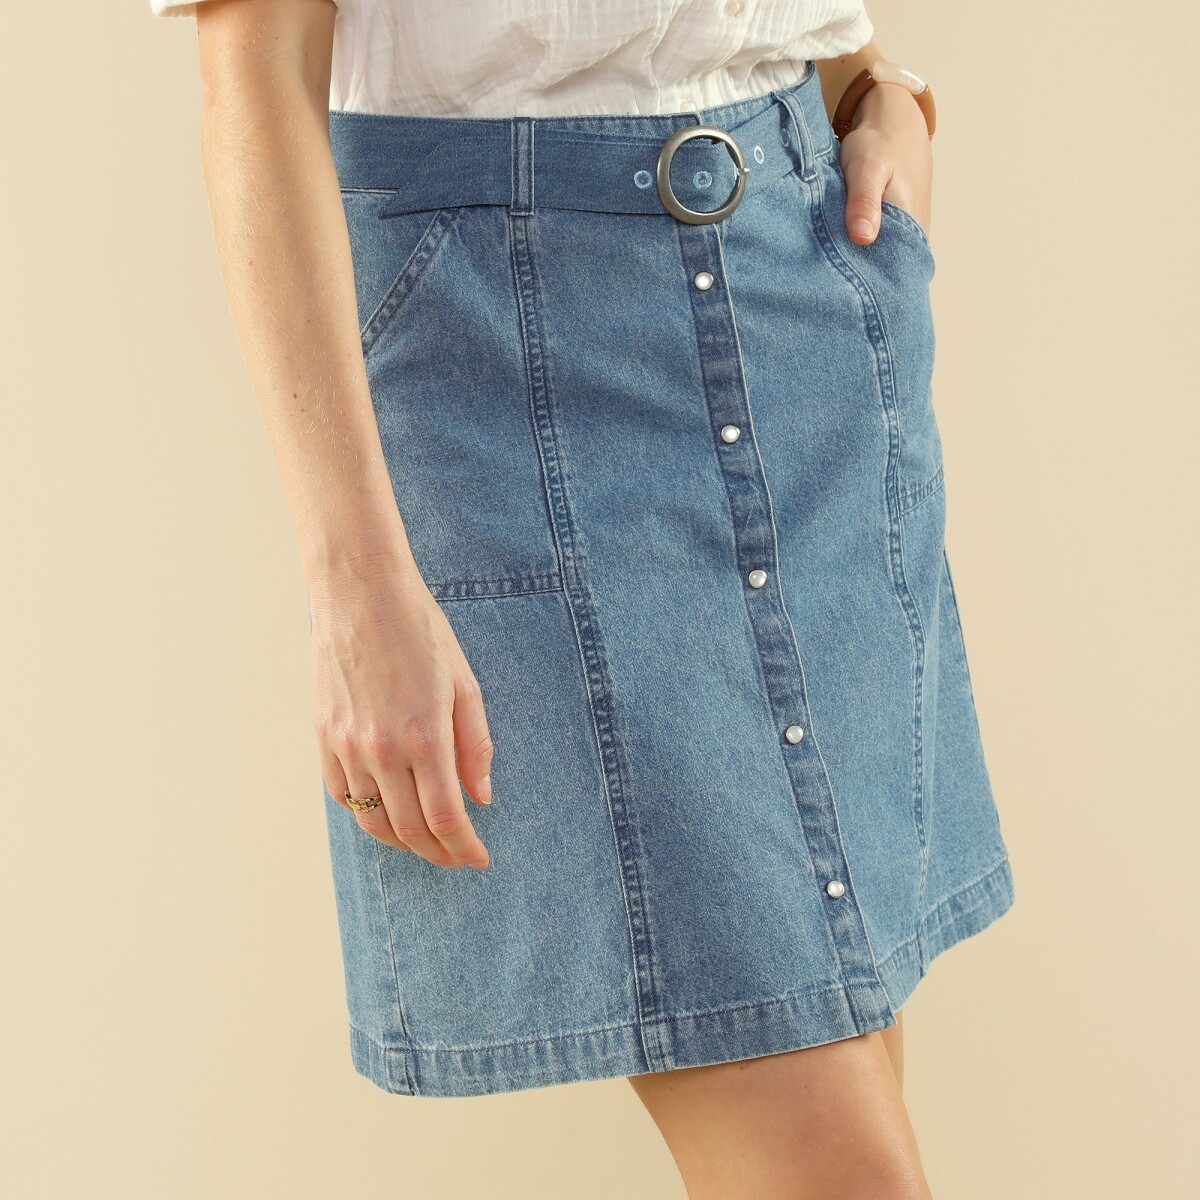 Rozšírená džínsová sukňa s opaskom na kovovú sponu